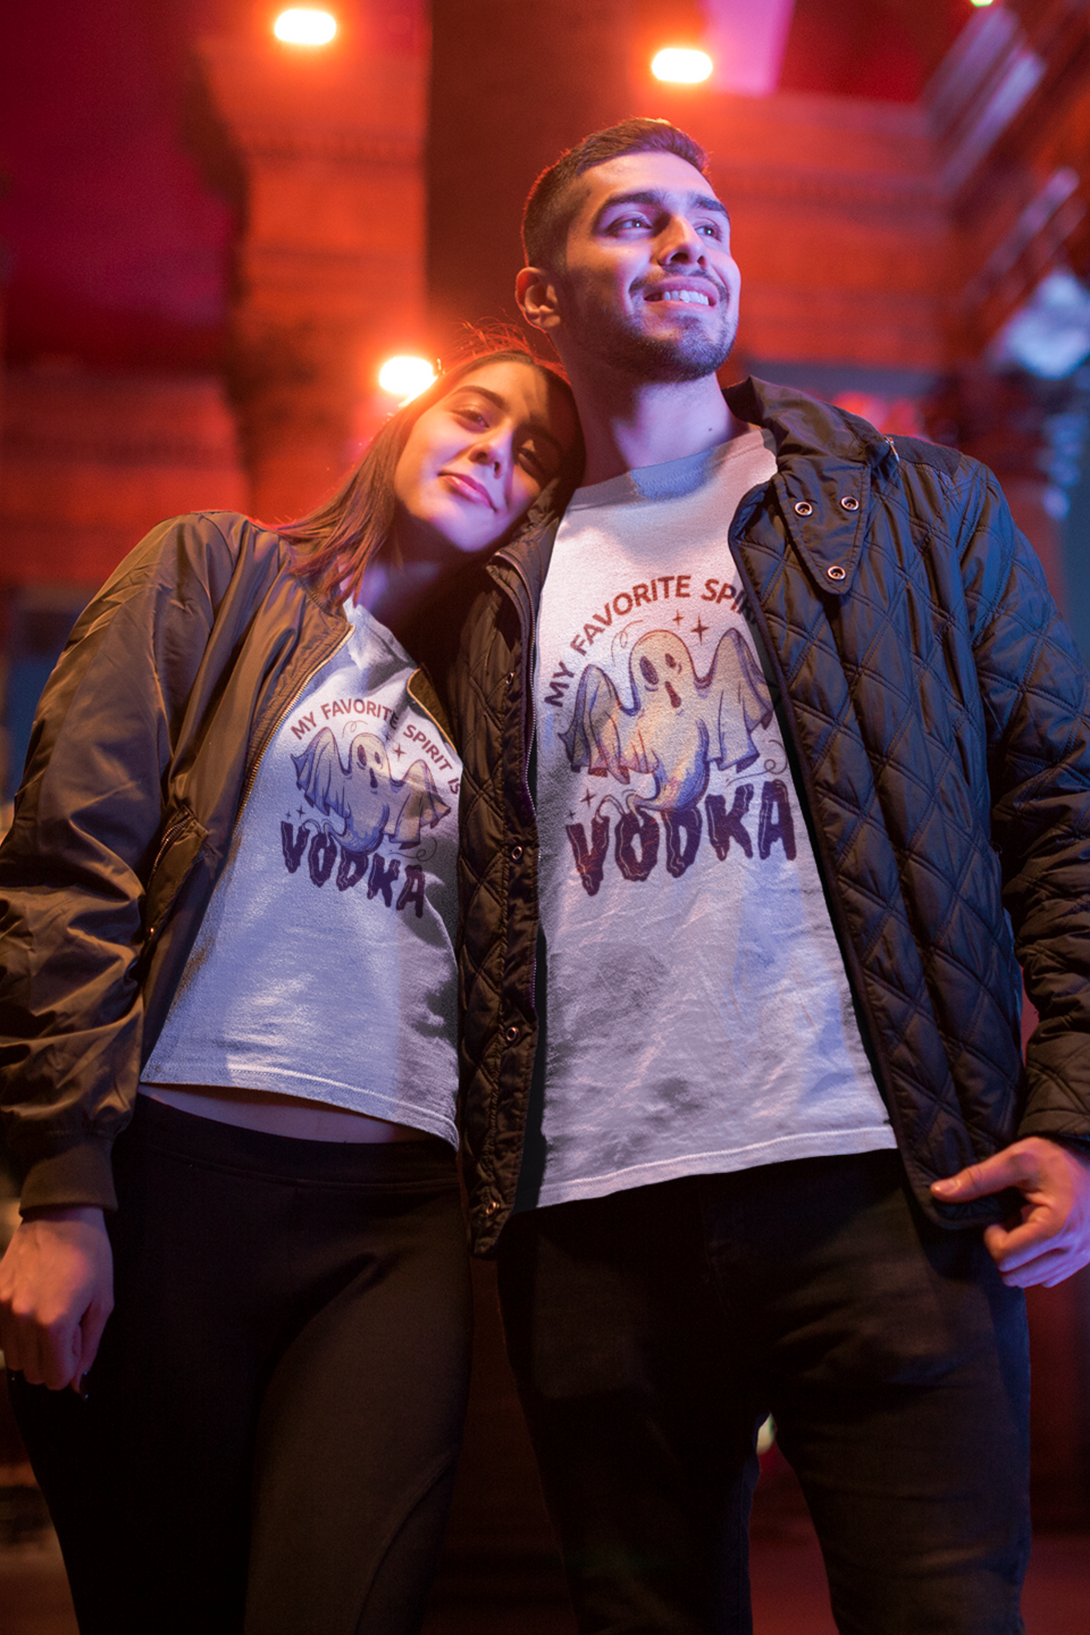 My Favourite Spirit Is Vodka Printed T-Shirt For Men - WowWaves - 2